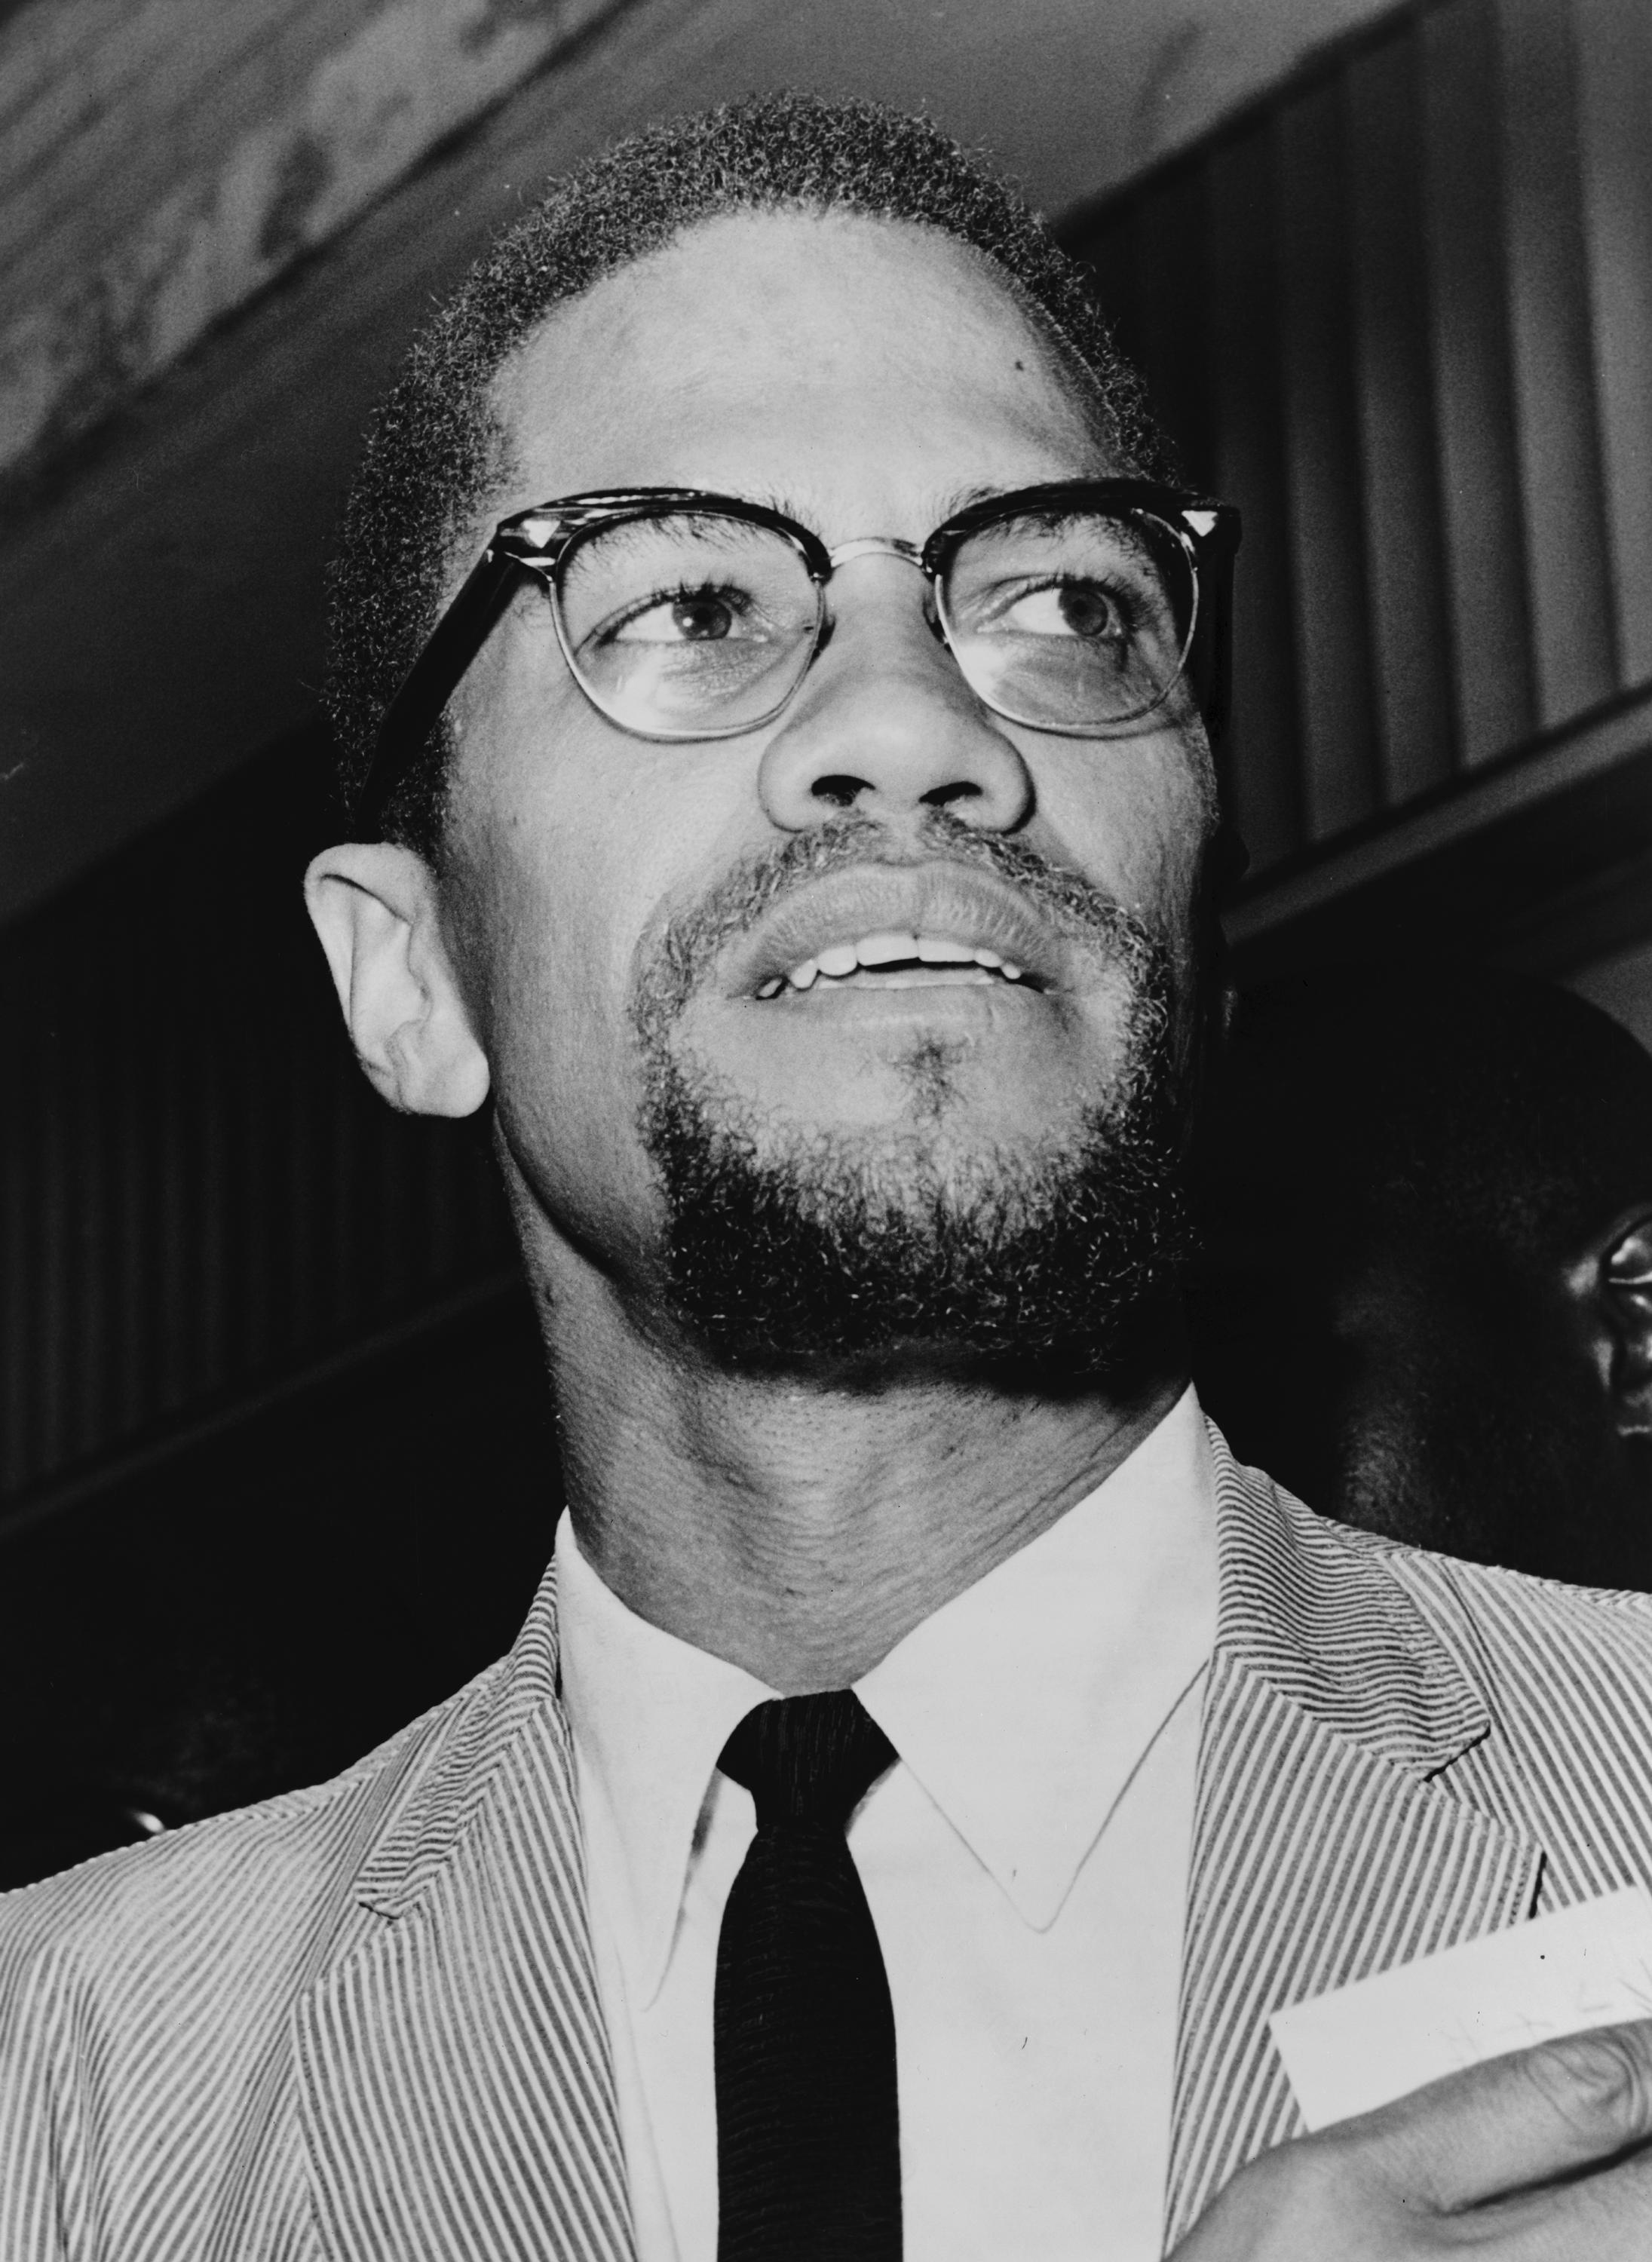 Malcolm X Wallpaper on